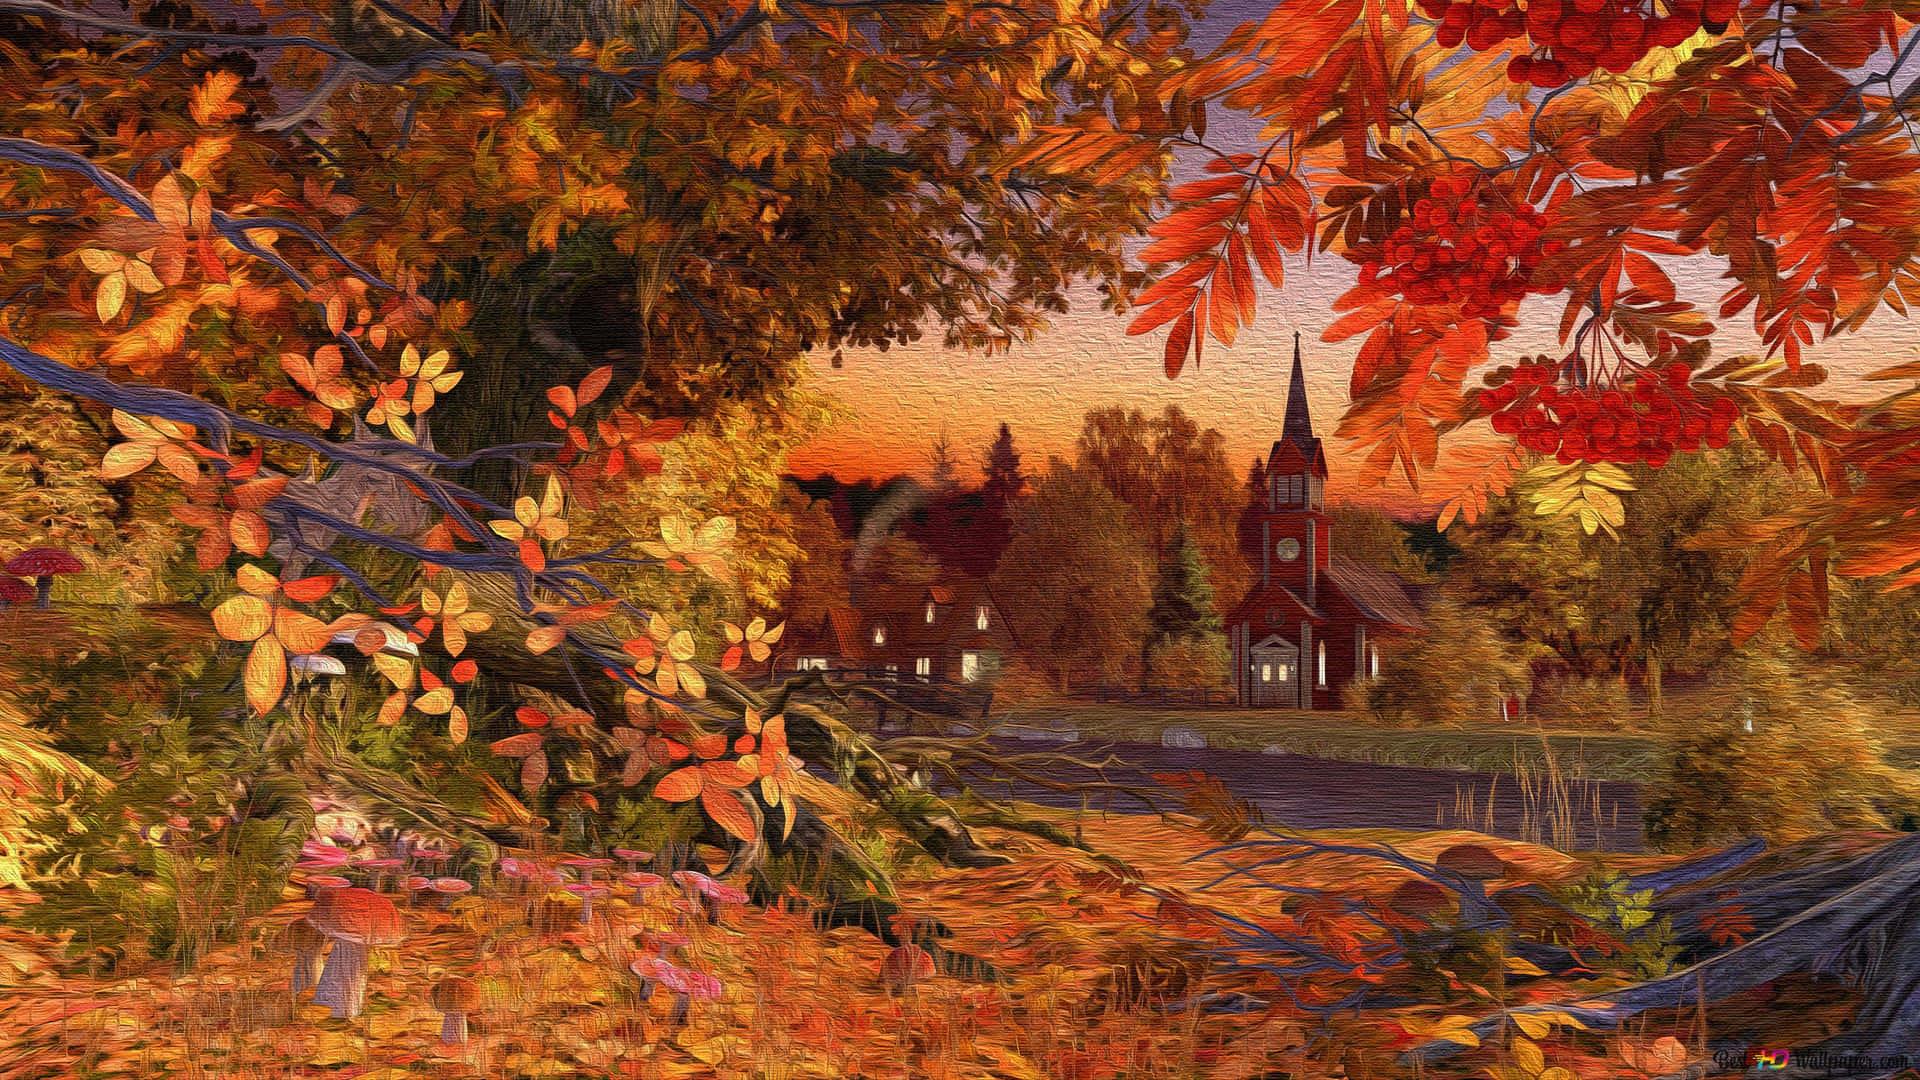 Enjoy The Autumn Scenery Up Close Wallpaper